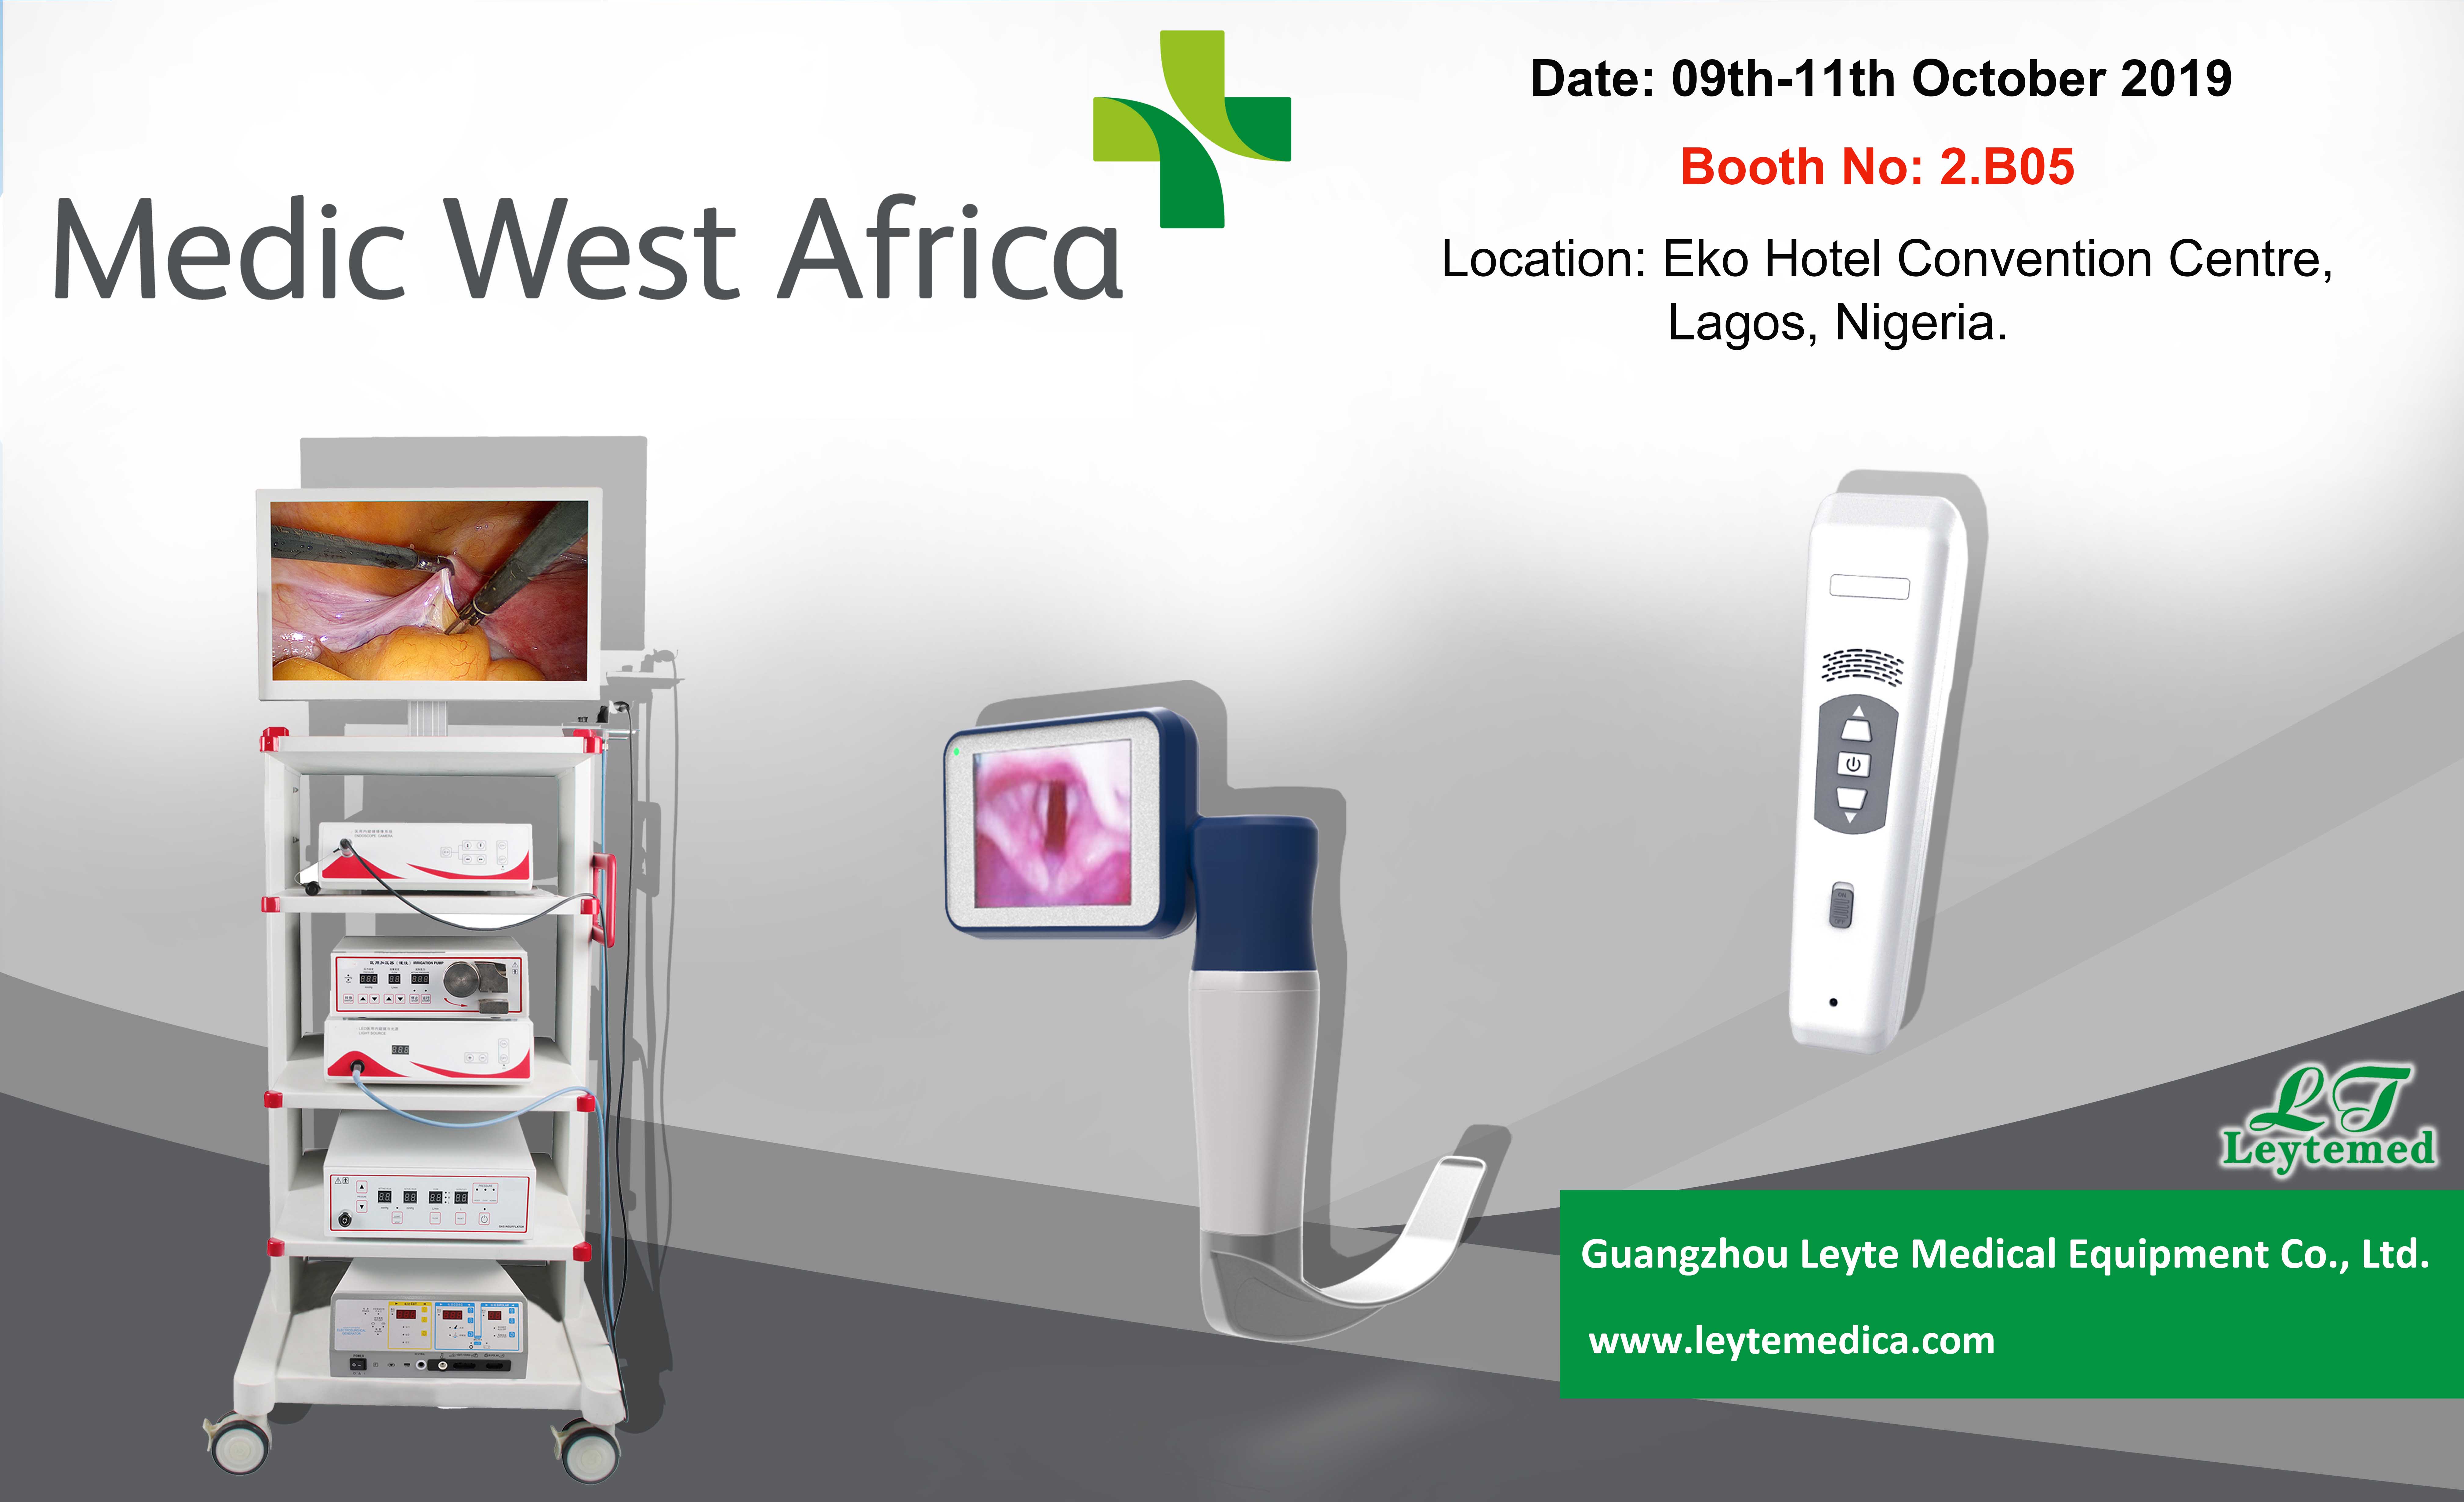 We will participate in Medic West Africa